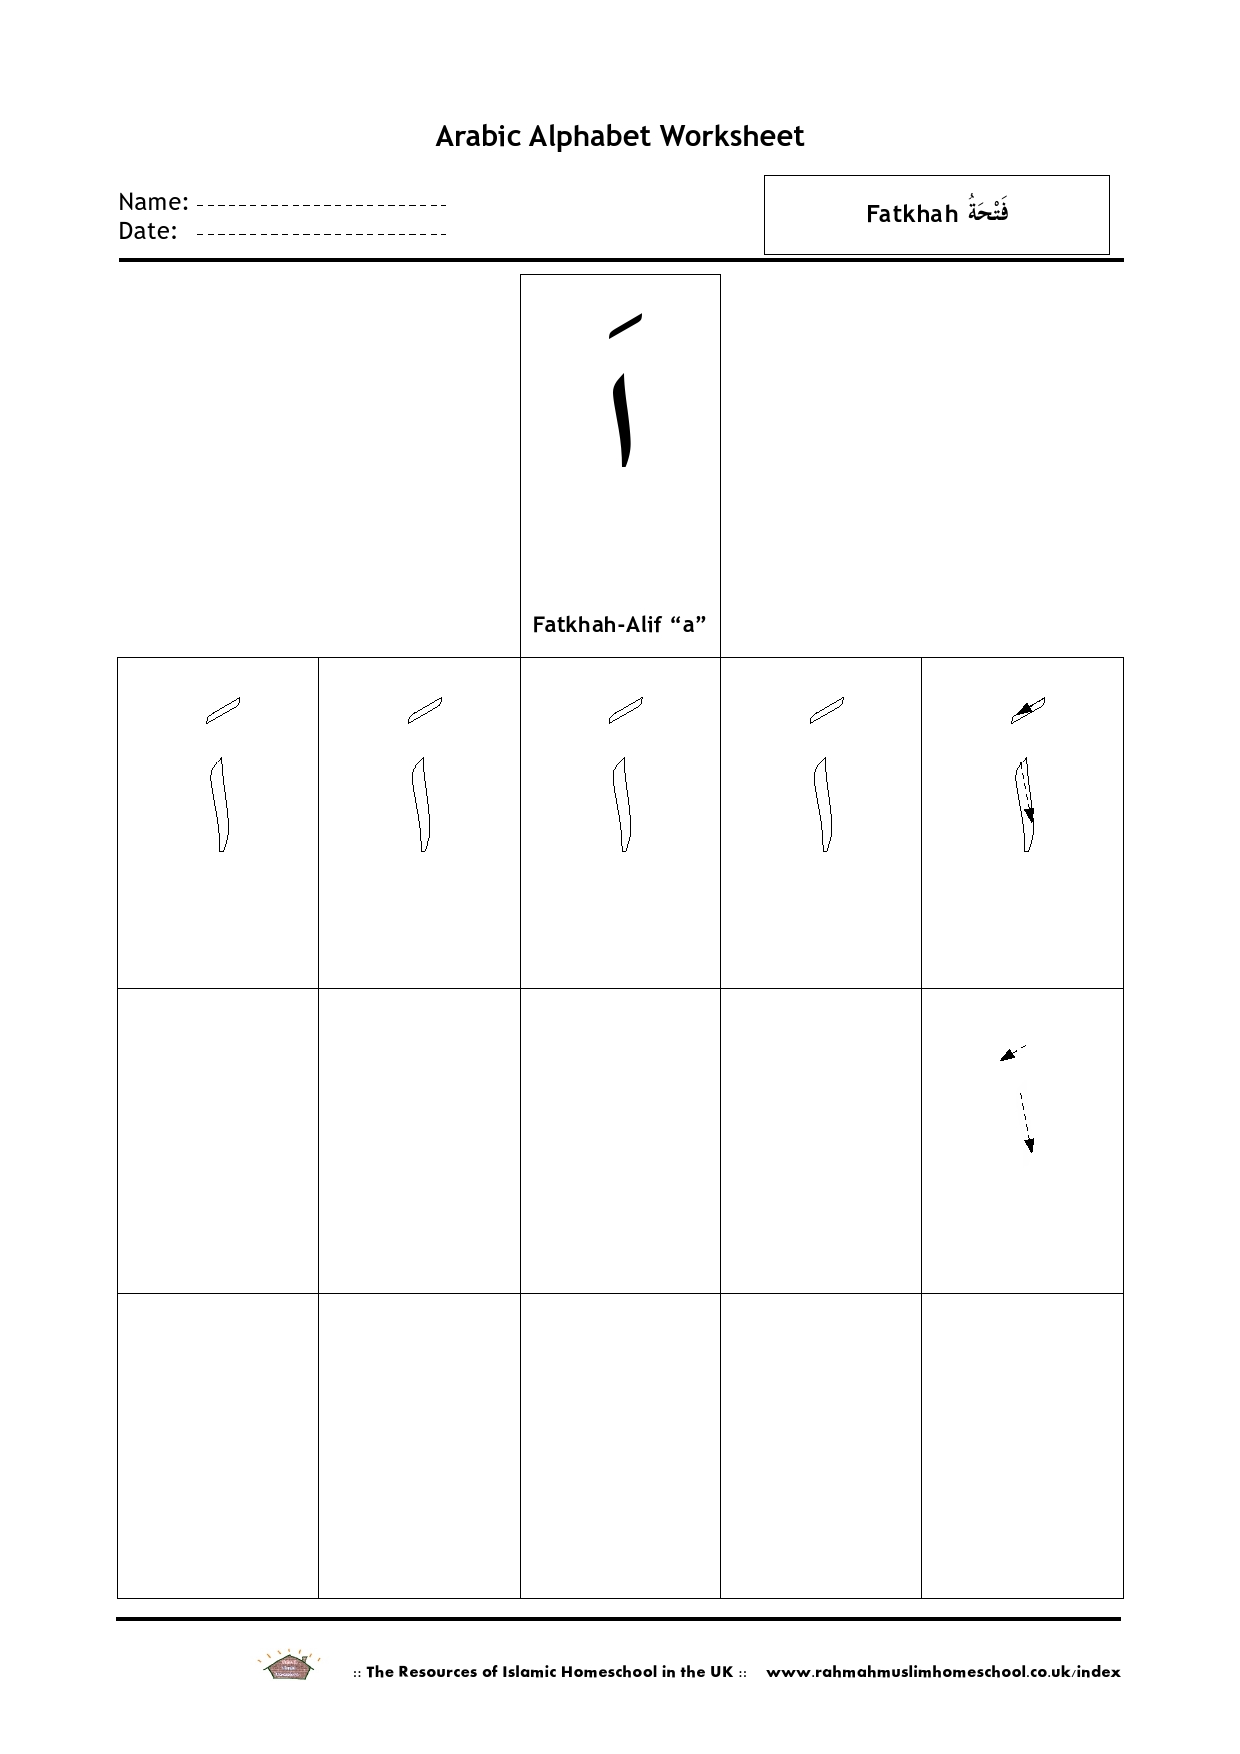 Arabic Alphabet Worksheets Image